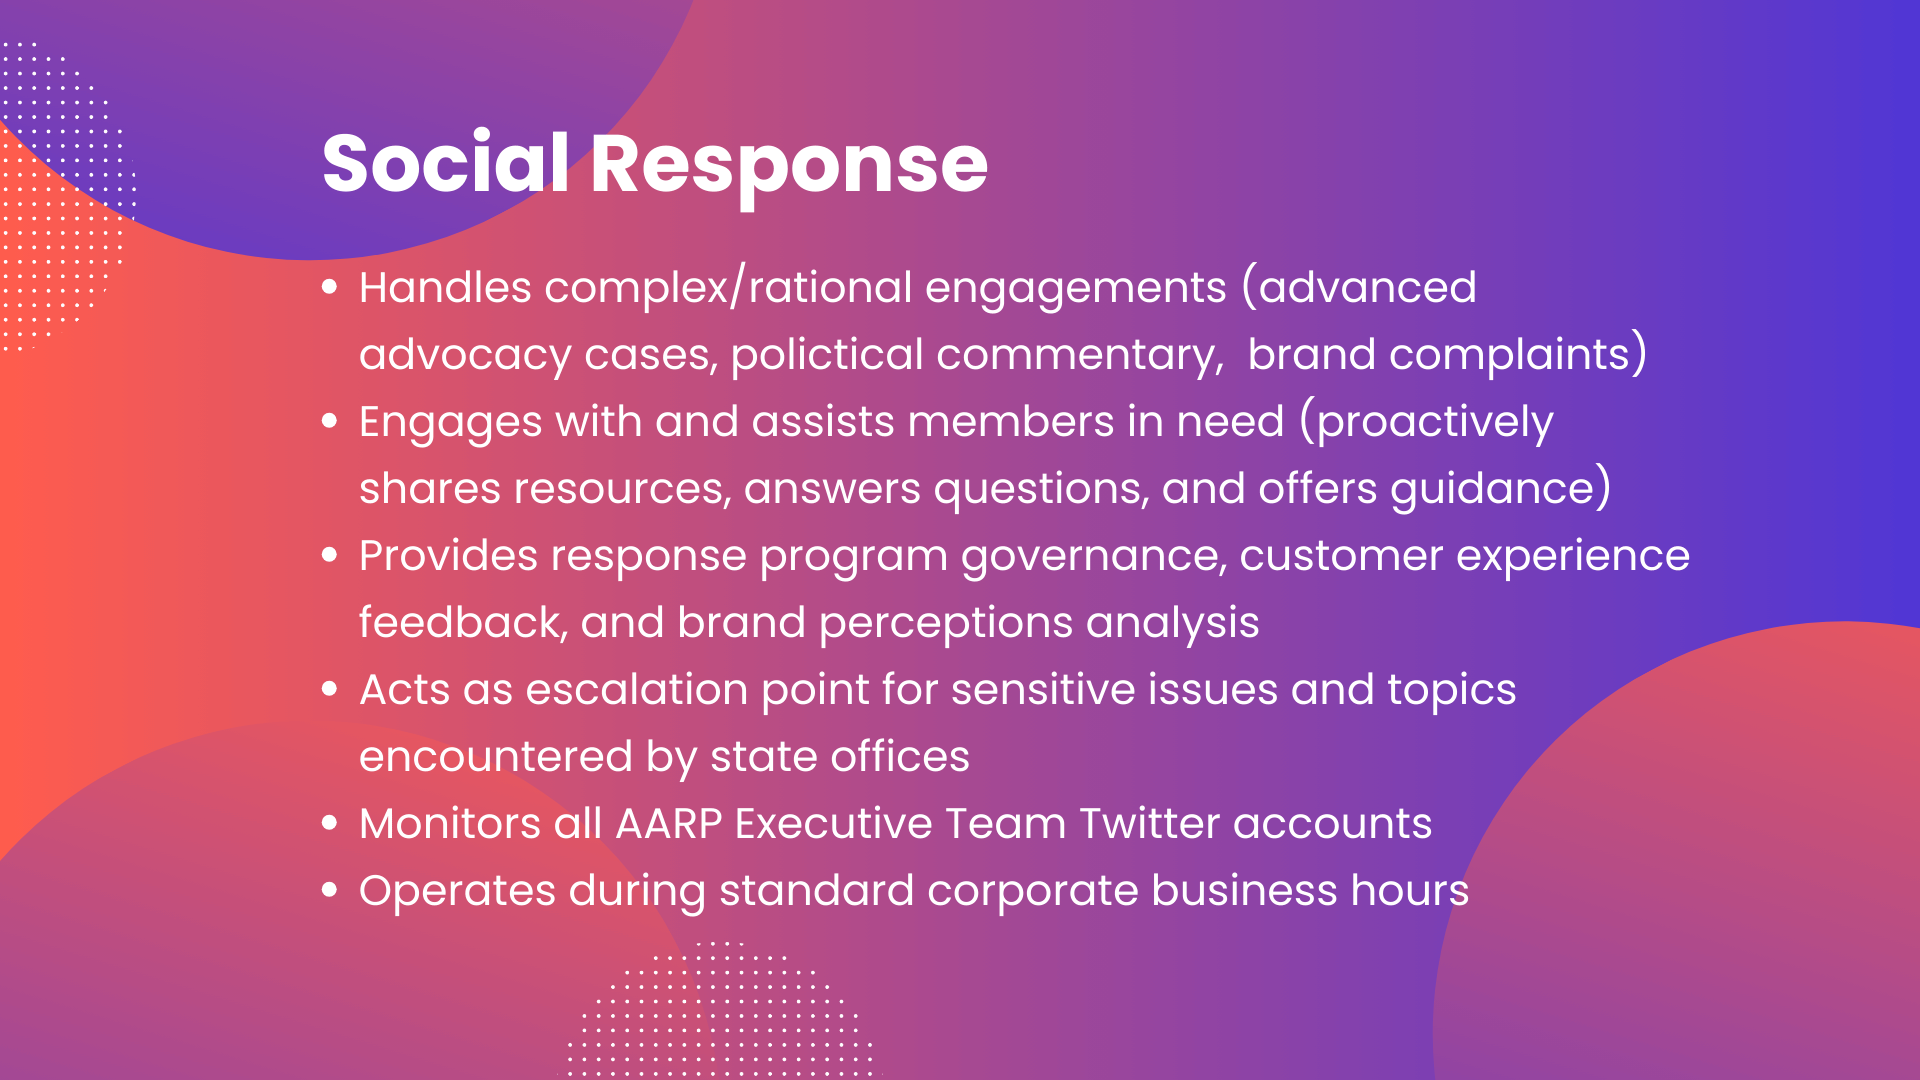 Social response